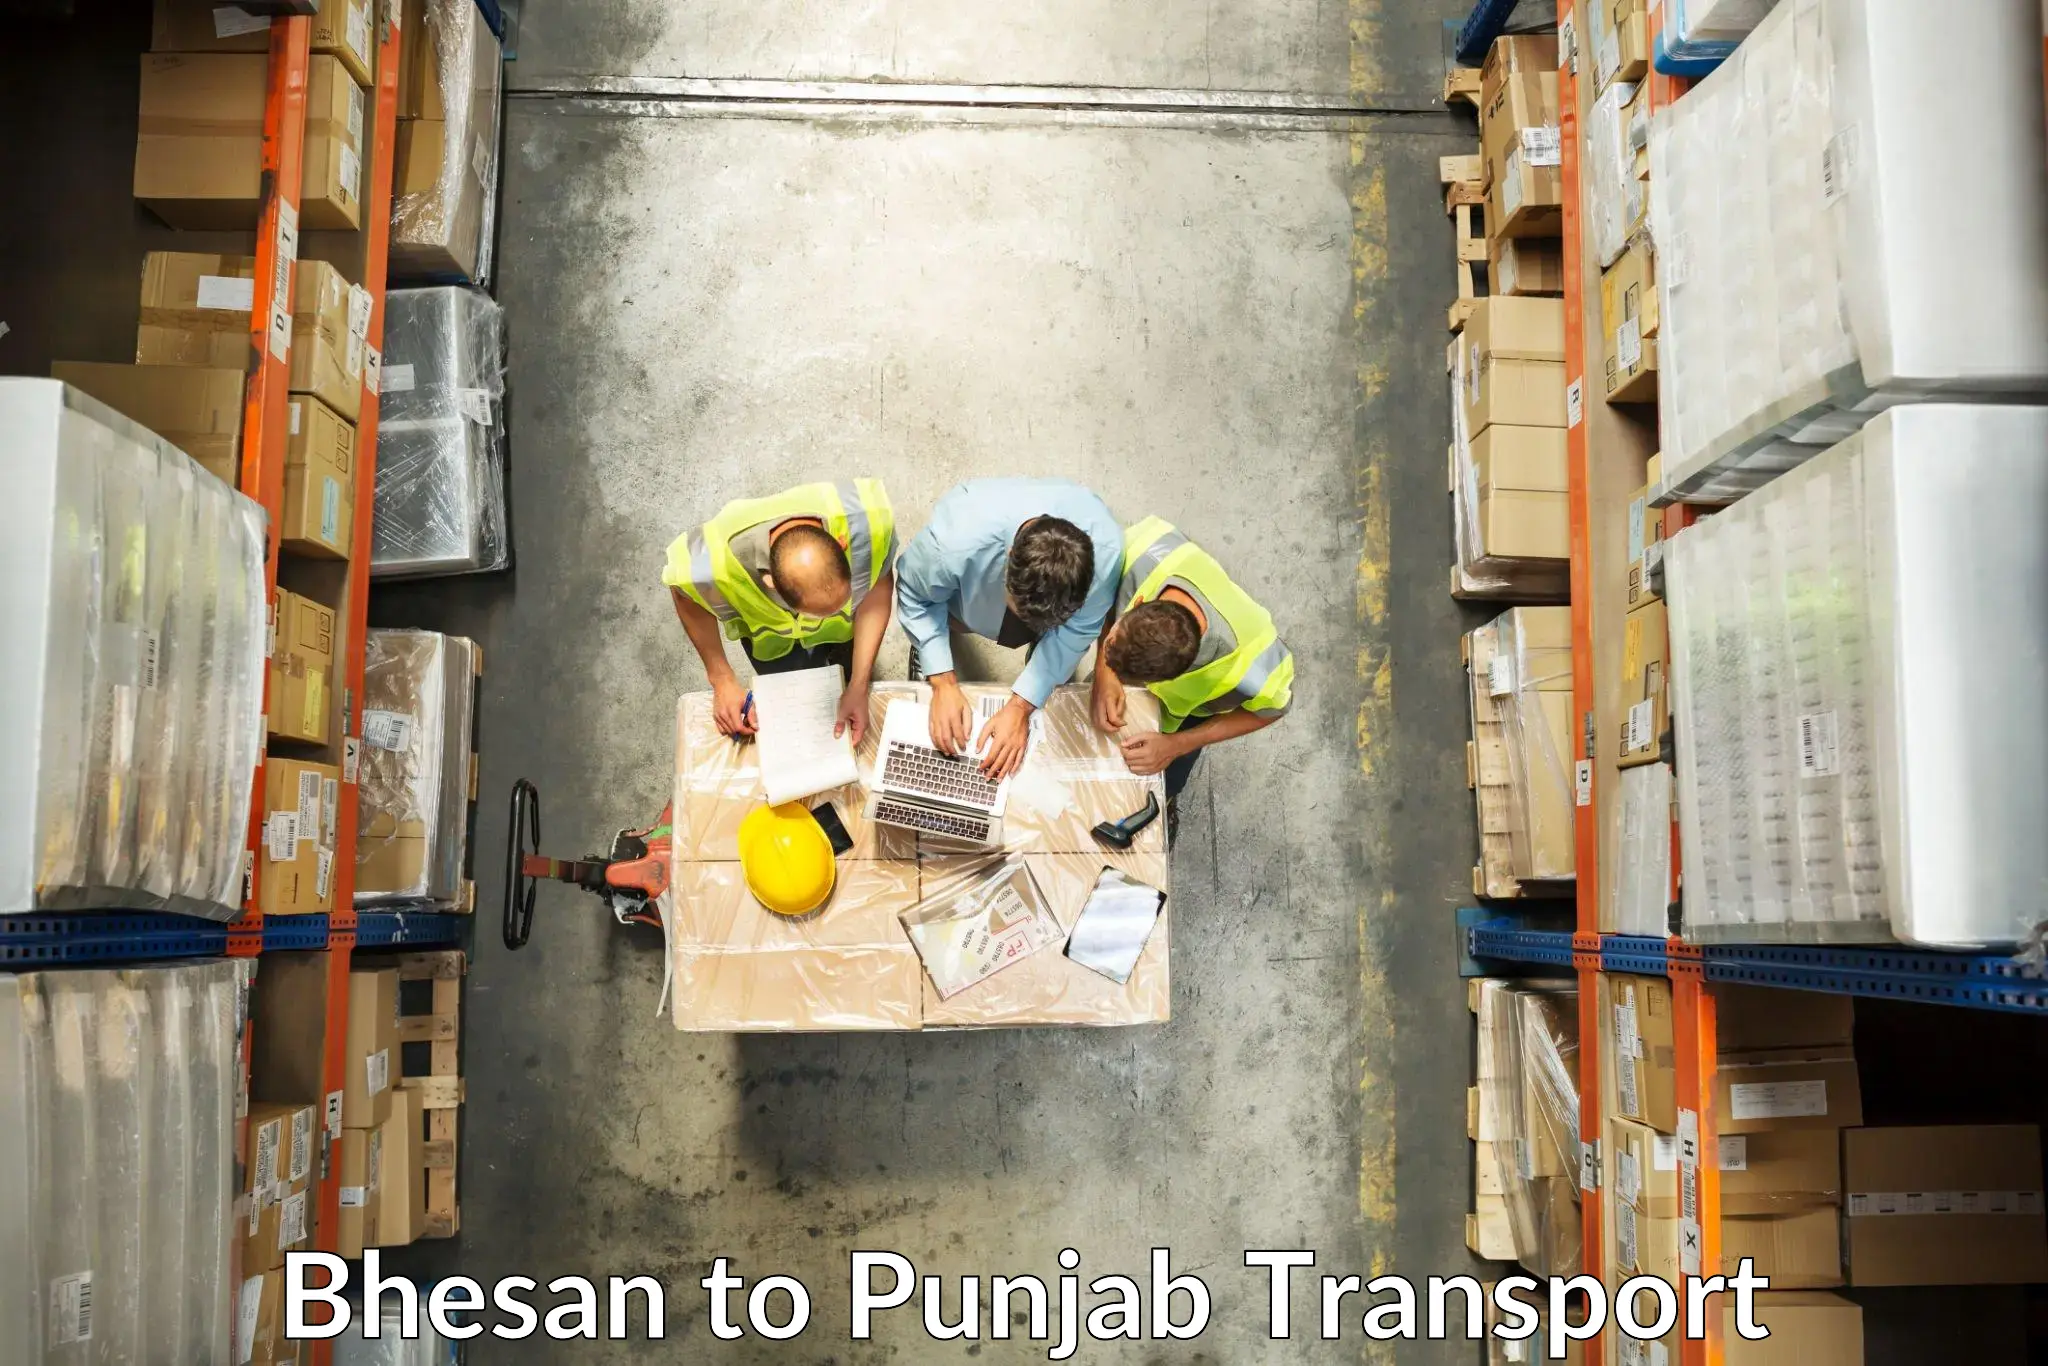 Delivery service Bhesan to Punjab